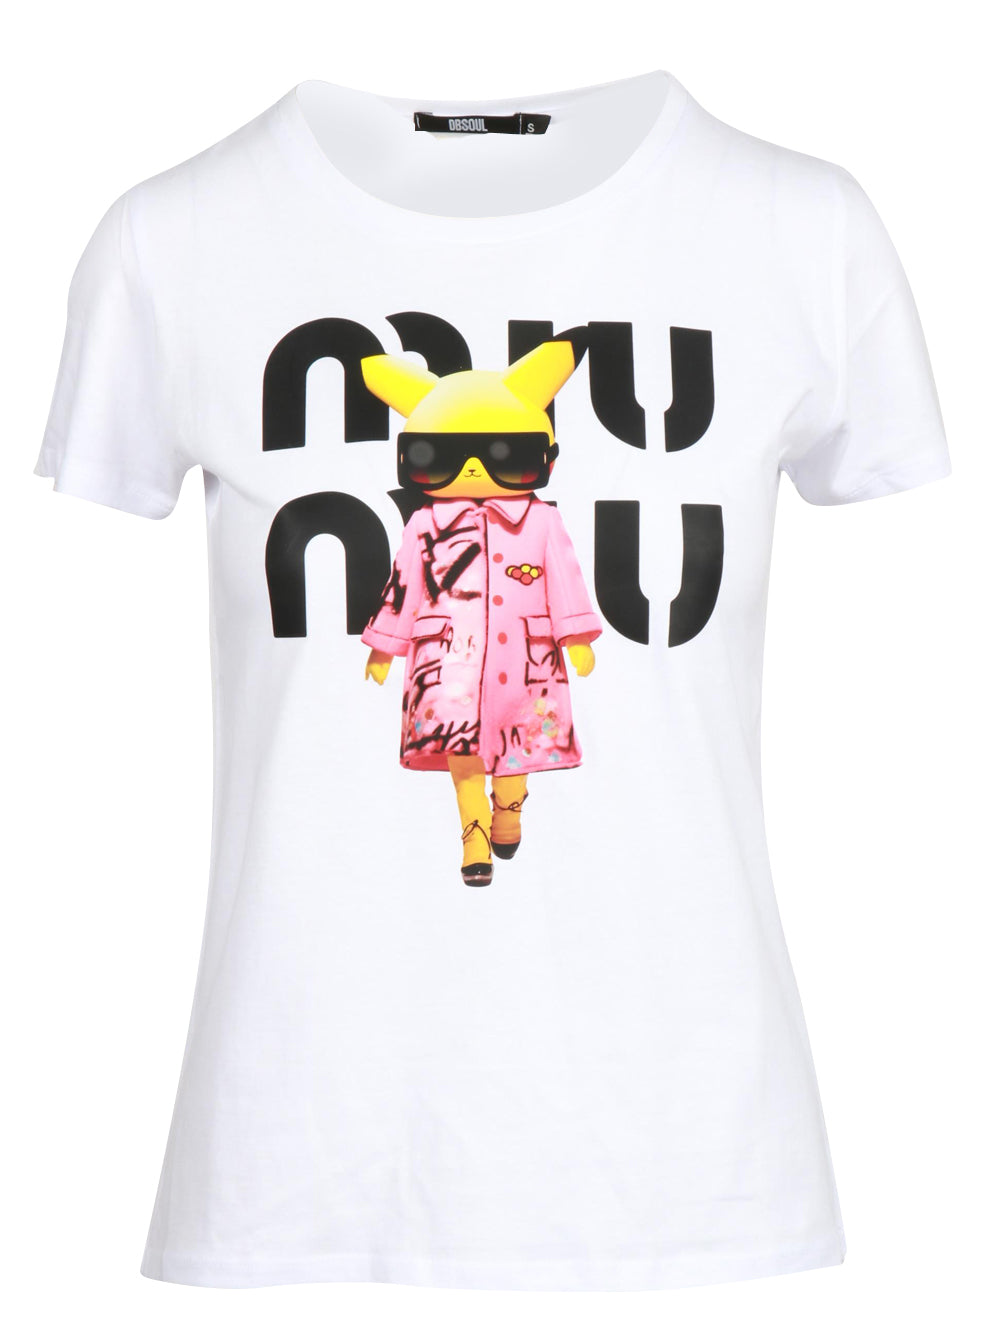 DBSOUL T-Shirt Rimini Bianca con Stampa Pikachu e Miu Miu Bianco